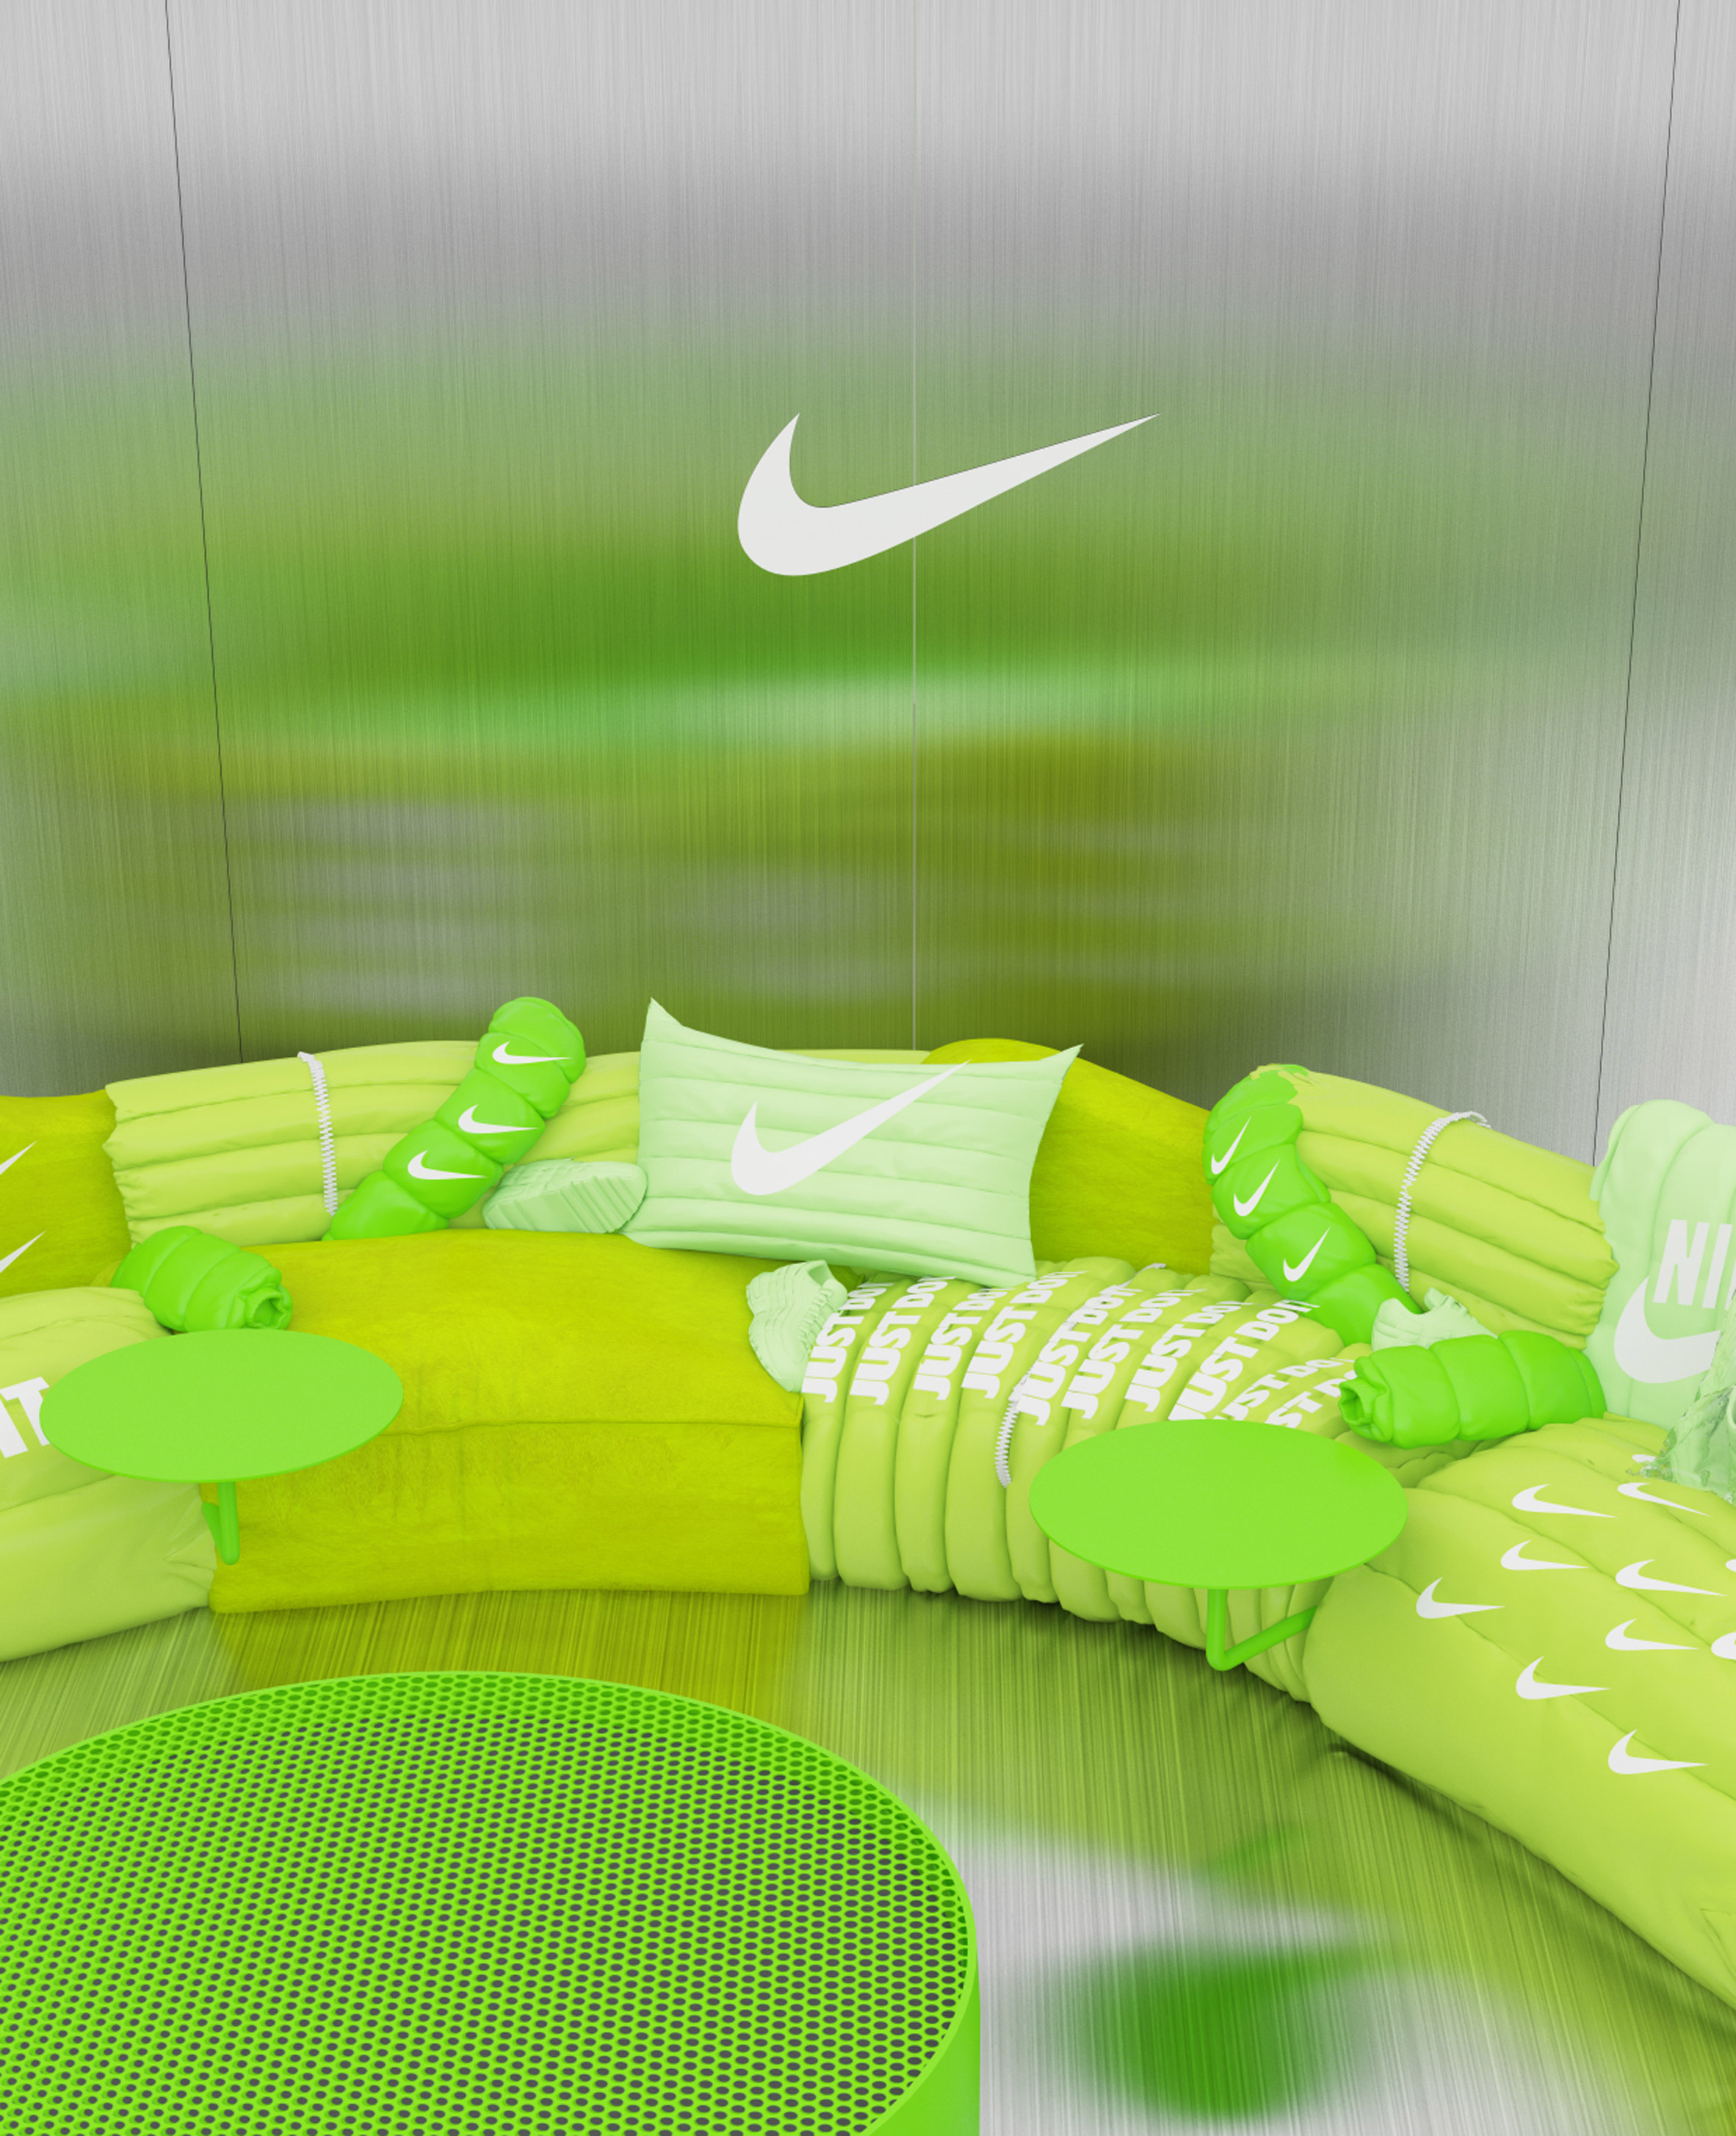 Crosby Studios designs upholstered green Nike